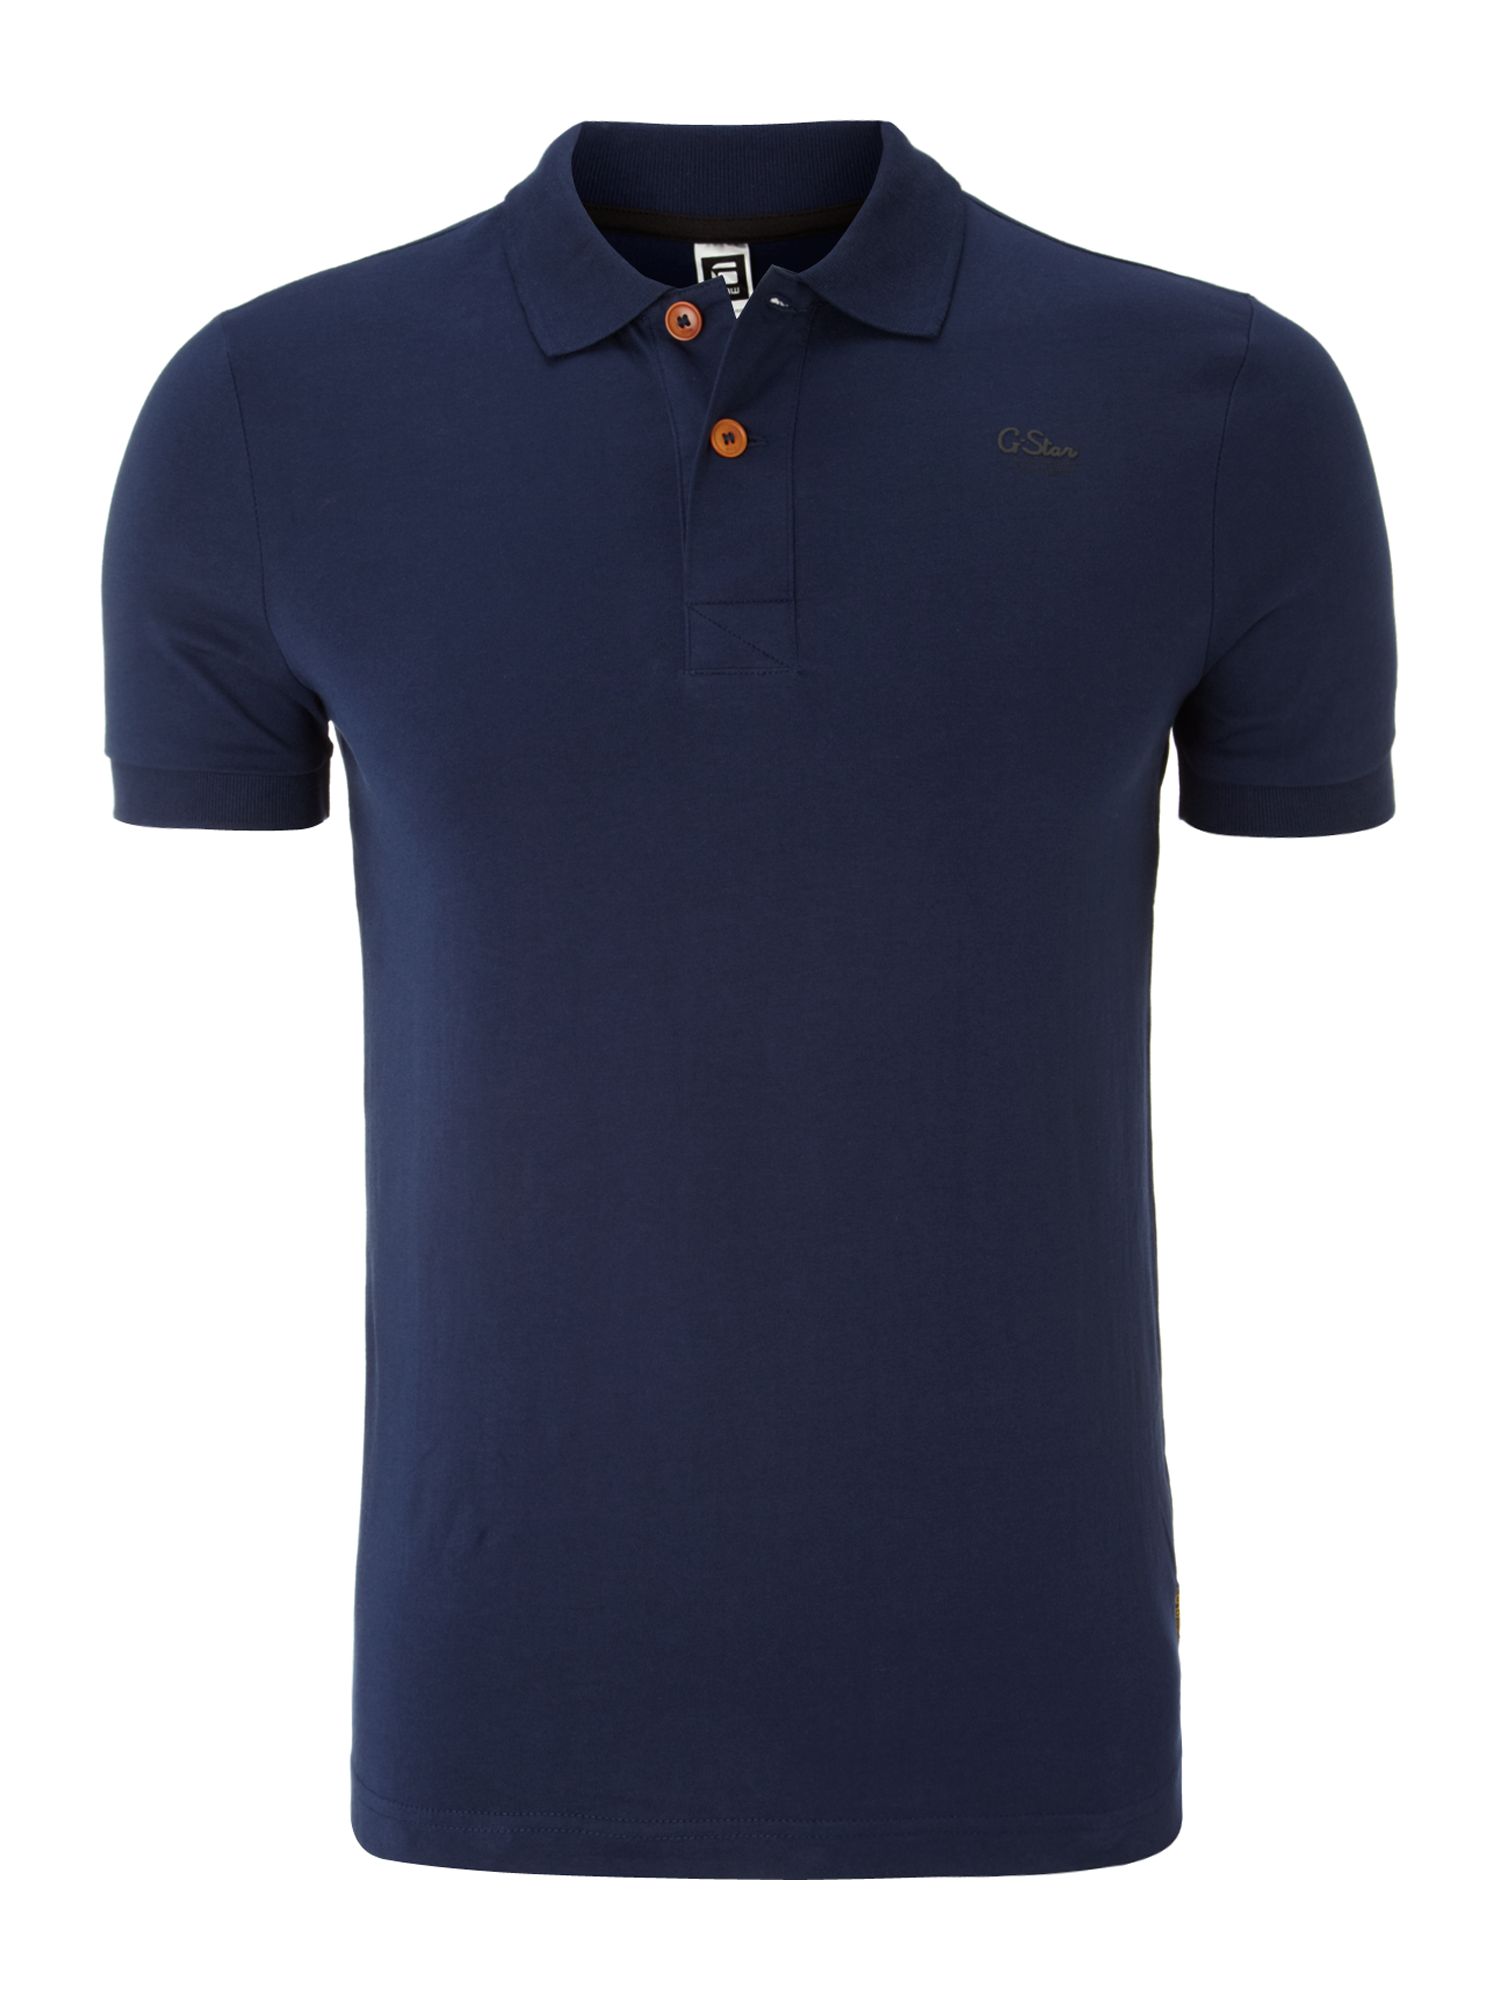 G-star Raw Small Logo Polo Shirt in Blue for Men (dark blue) | Lyst